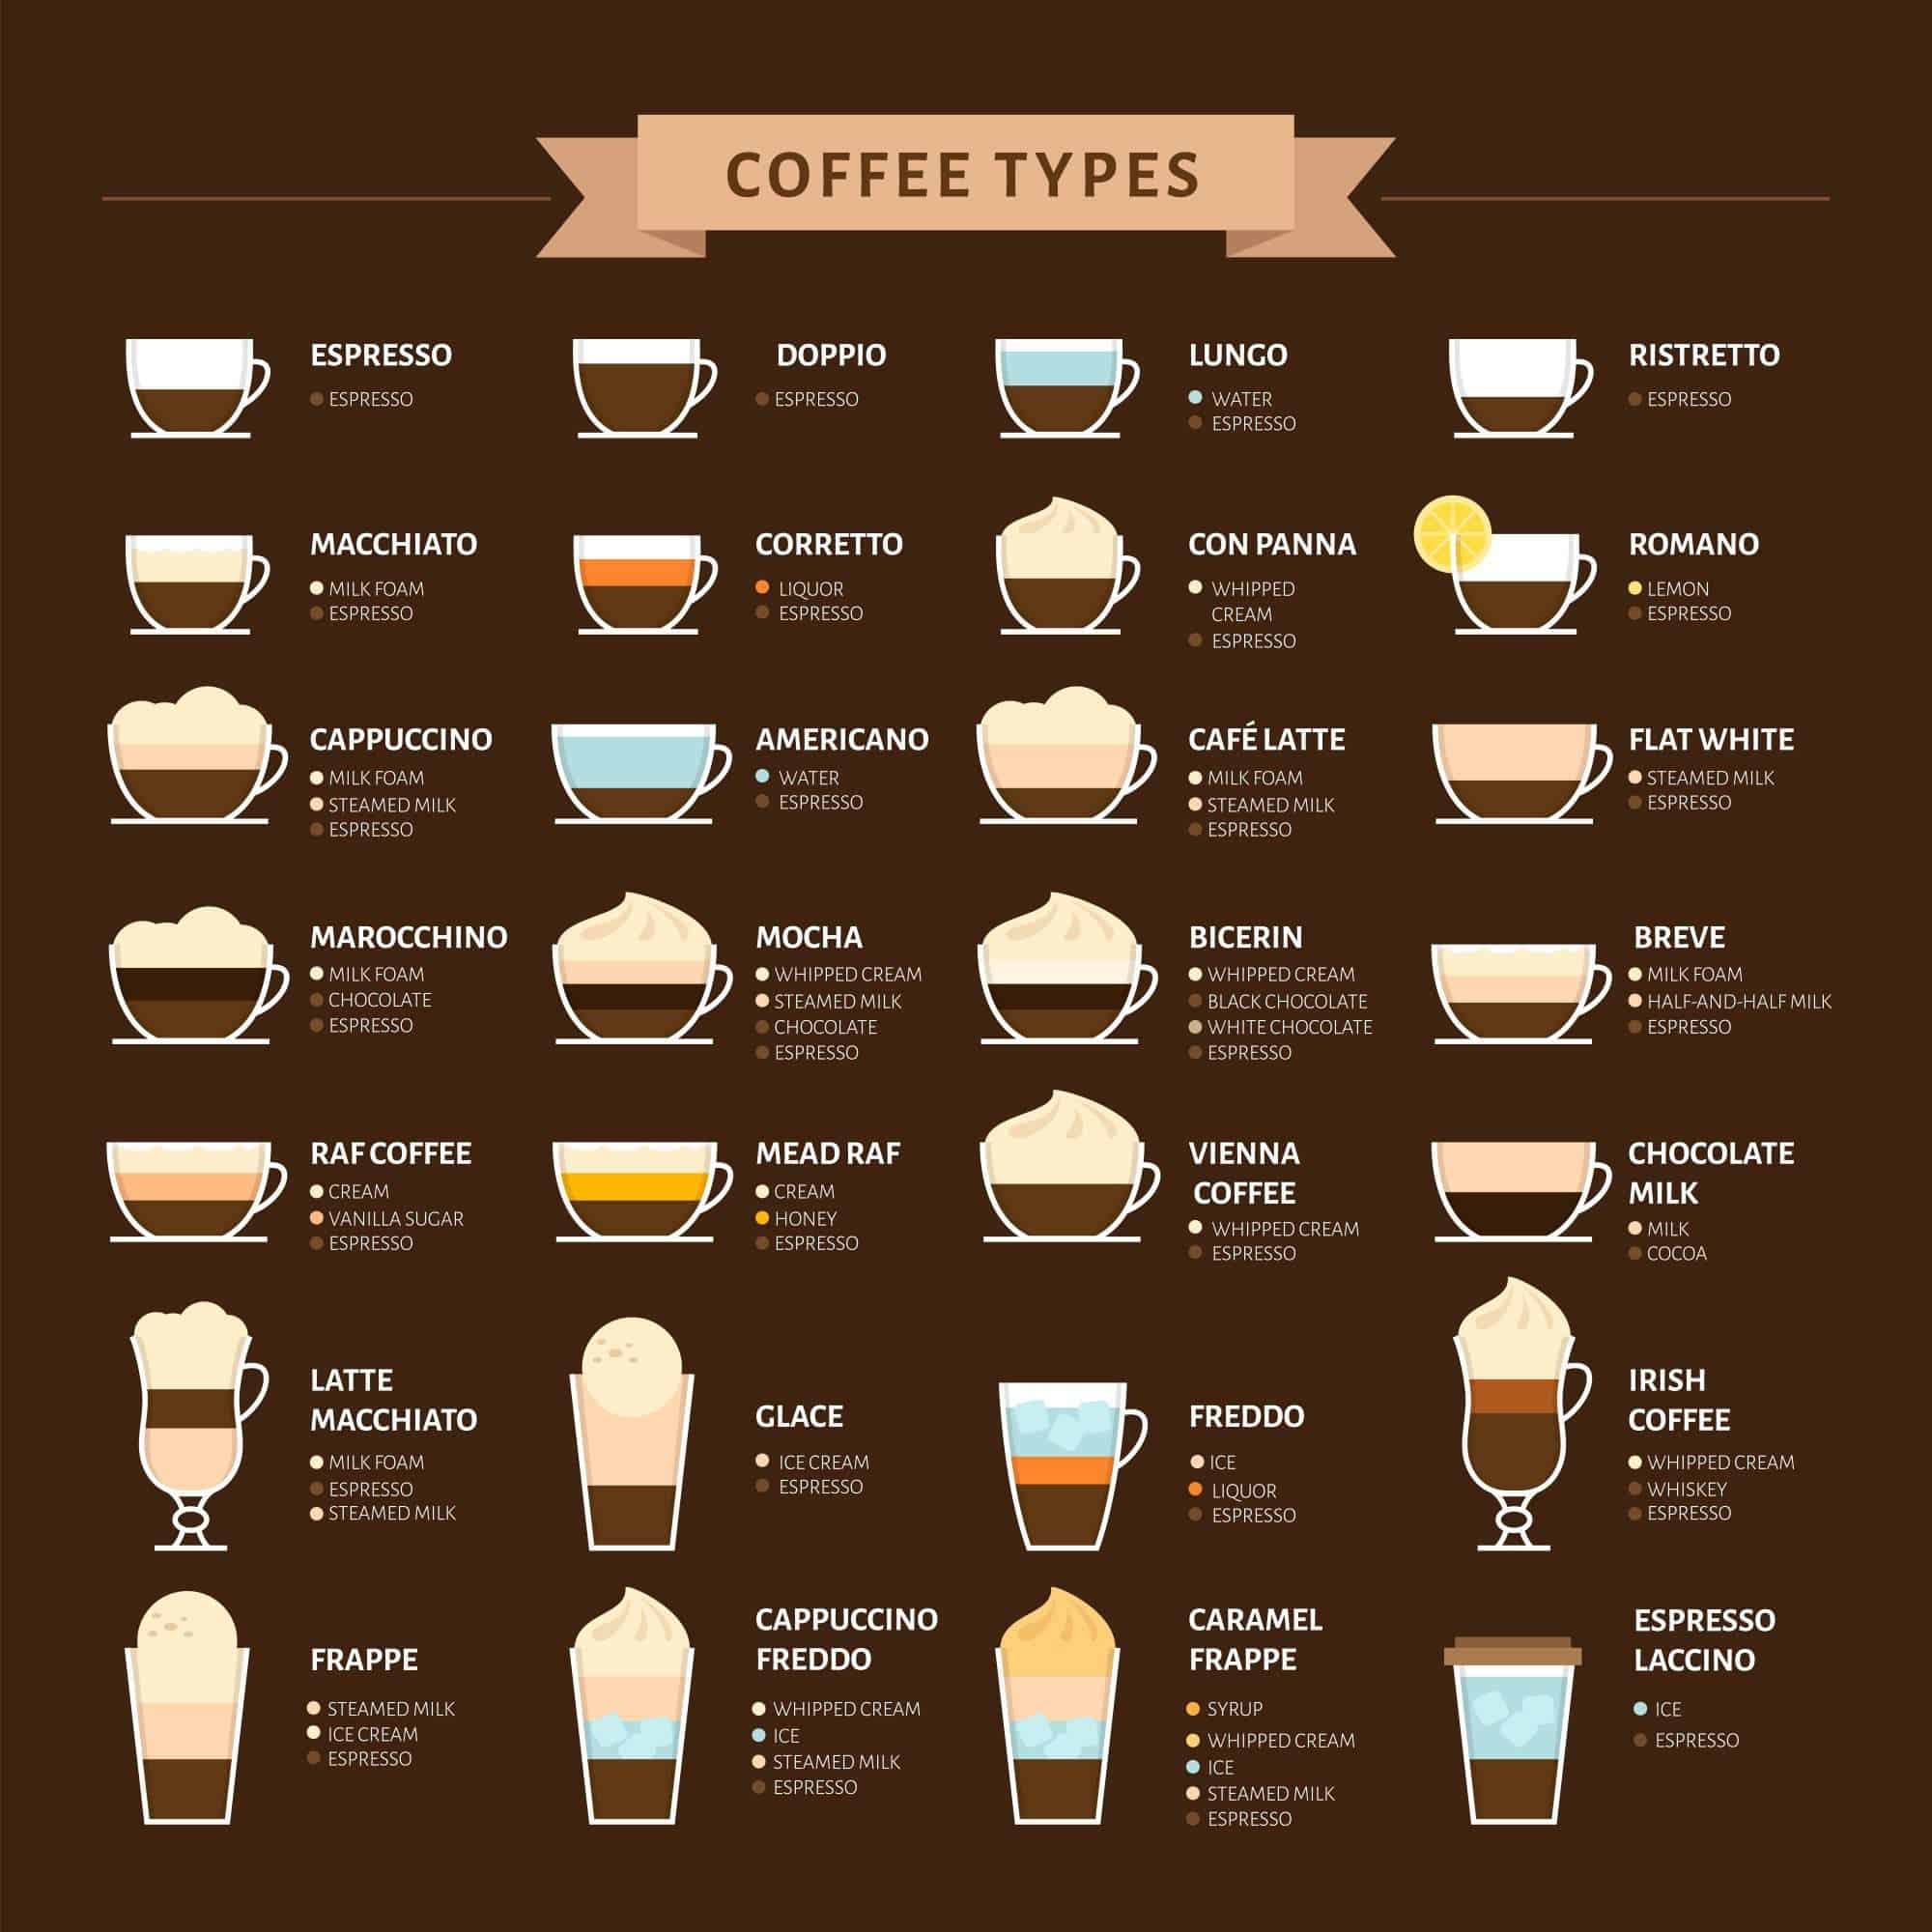 Кофе коретто (corretto) - состав и приготовление